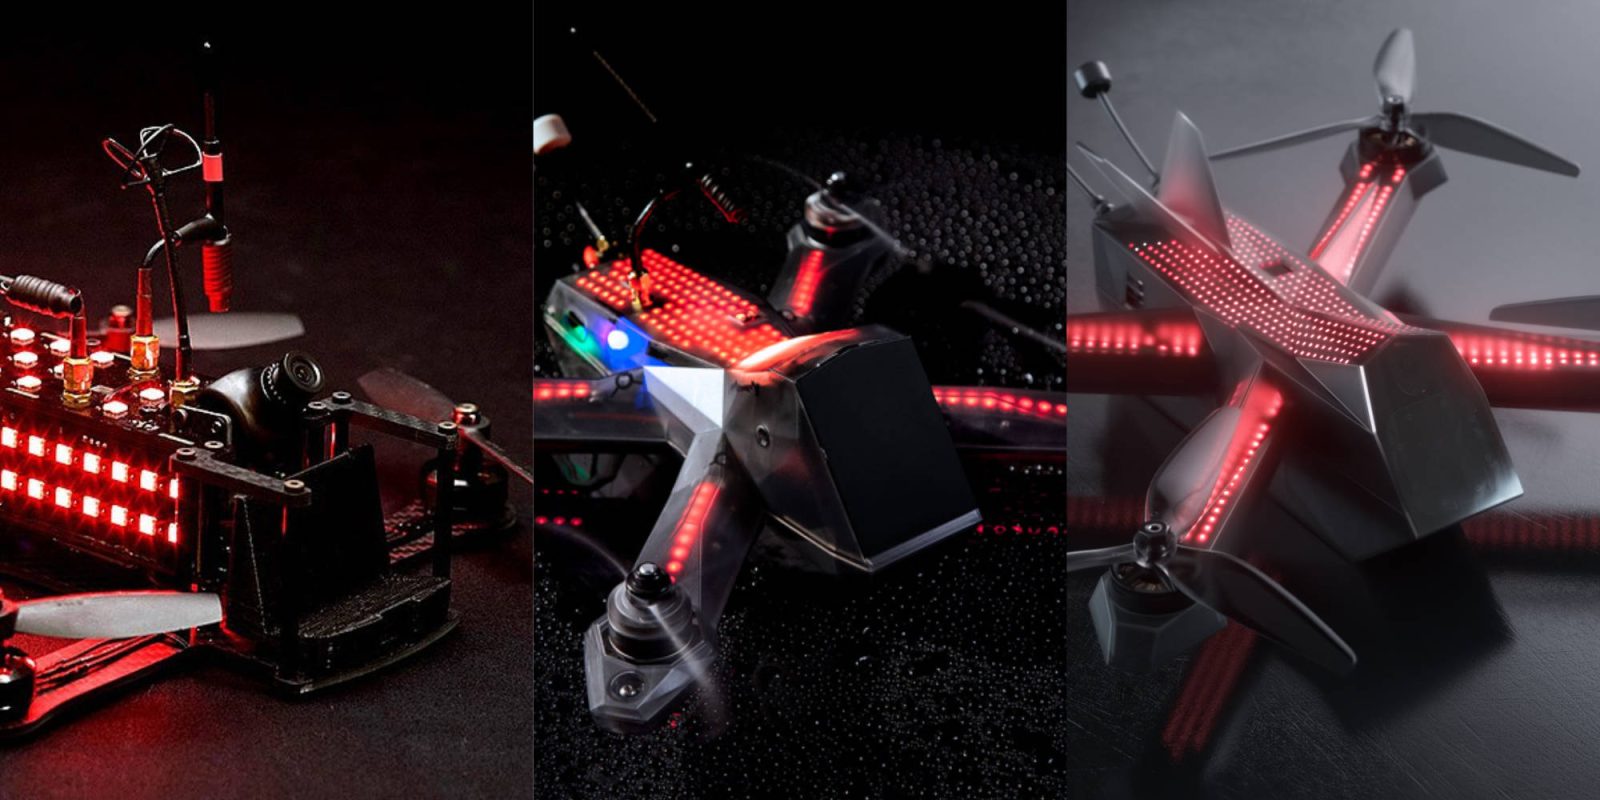 Drone Racing League's racing drones